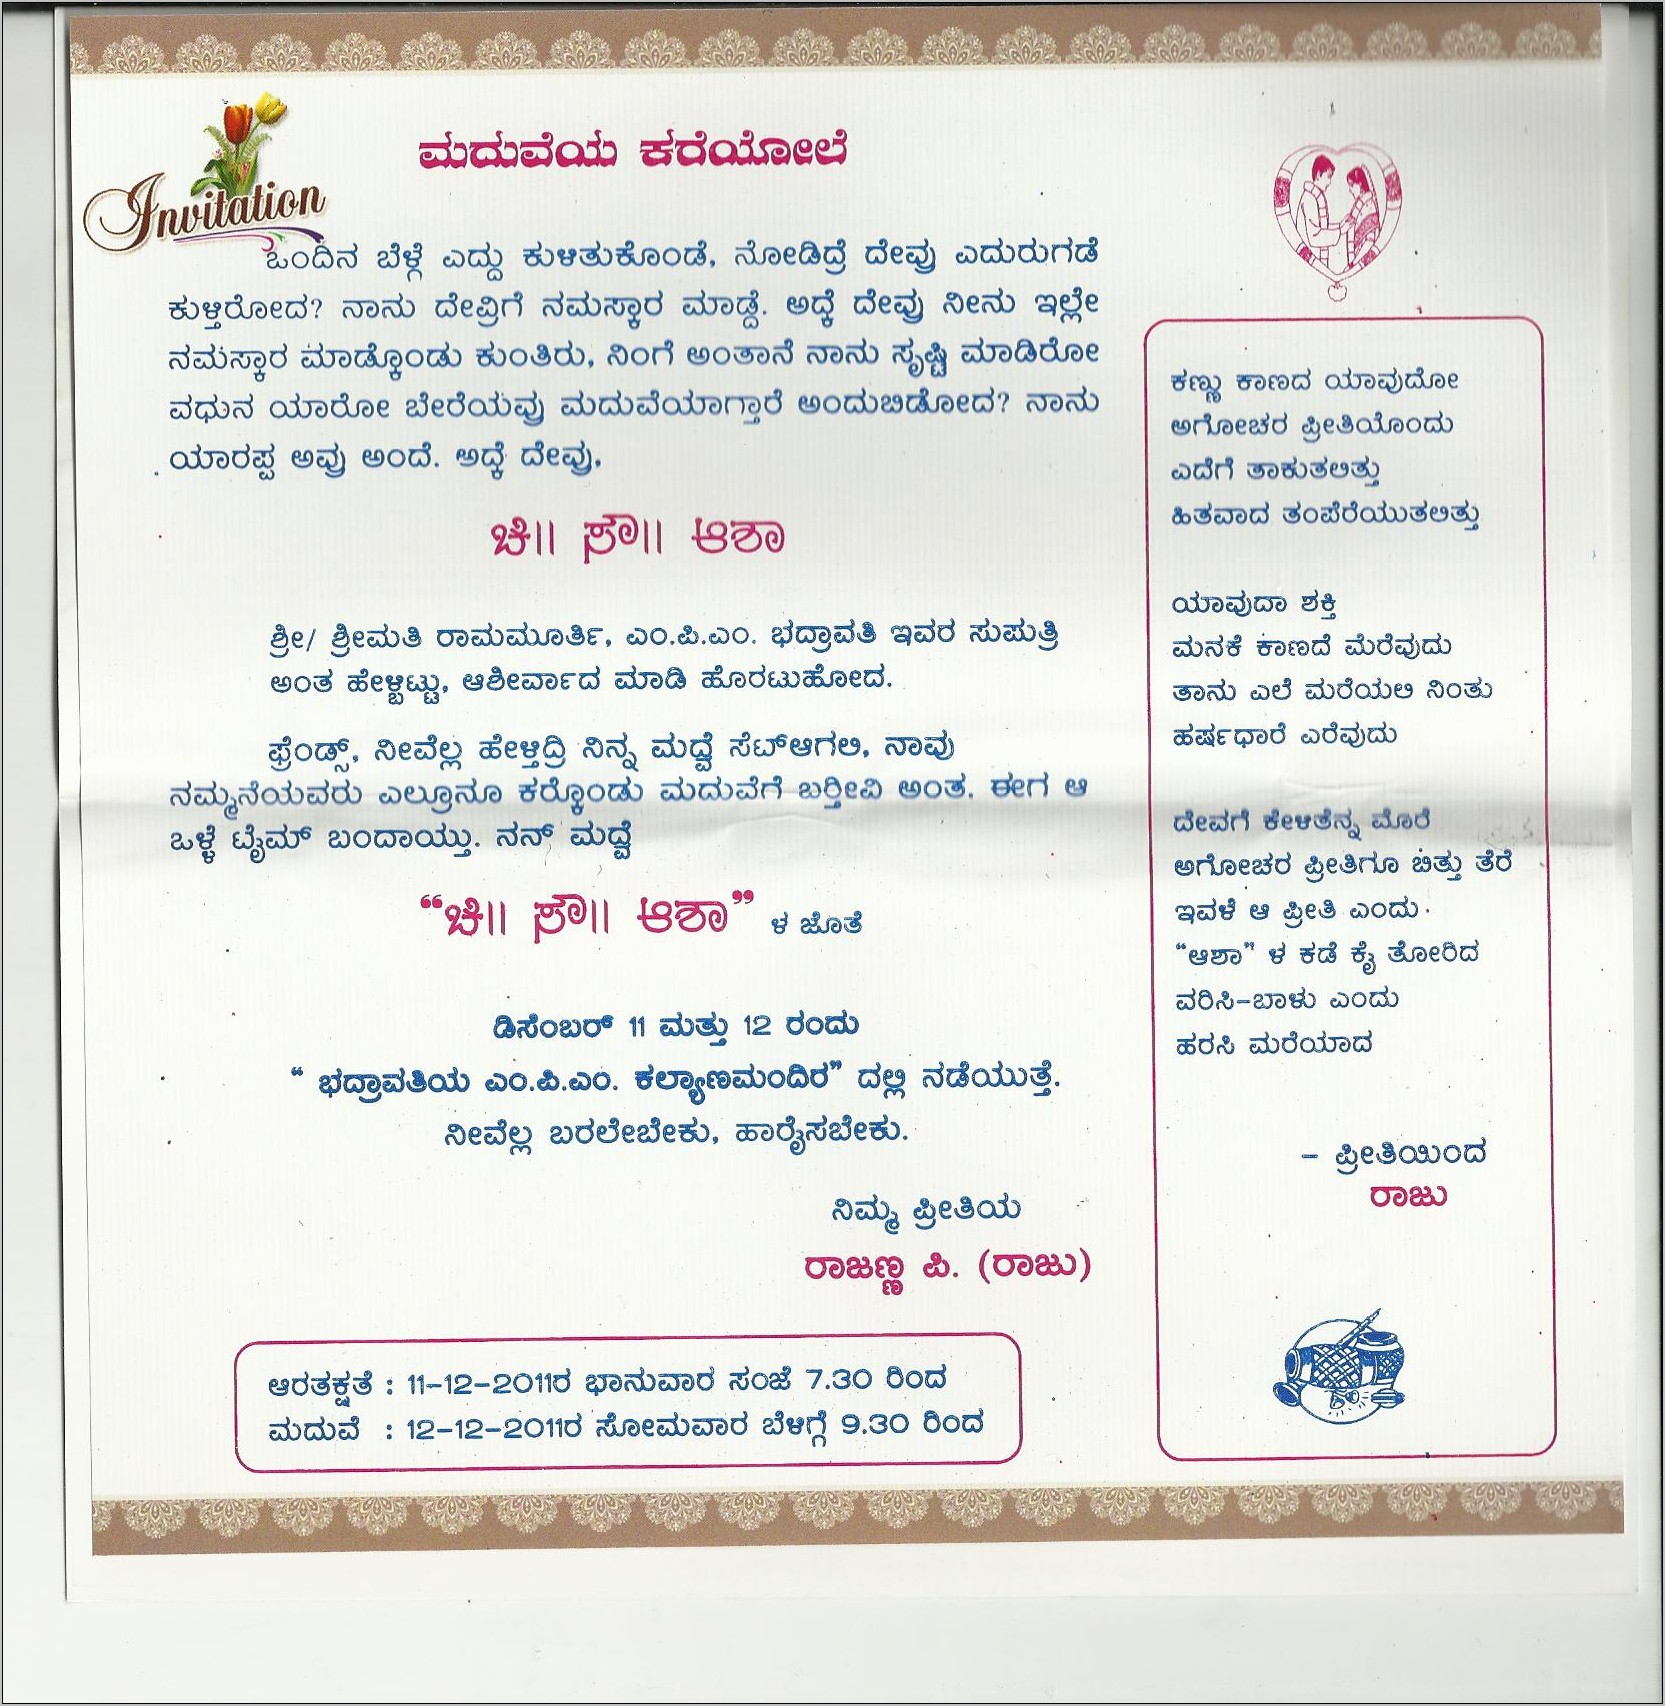 hindu-wedding-invitation-wording-in-kannada-invitations-restiumani-resume-45yk6nrywj